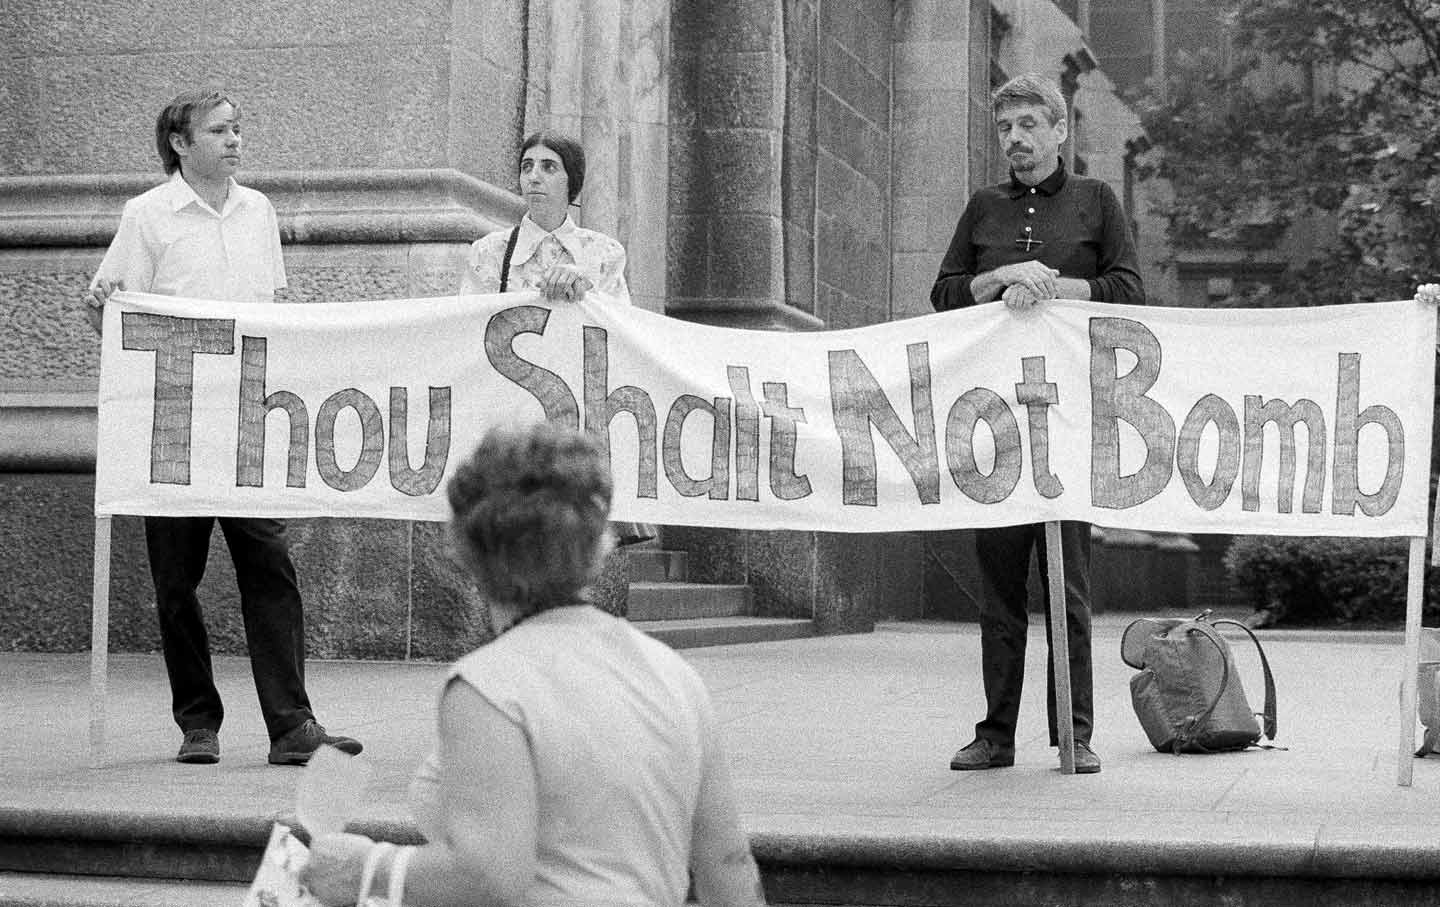 Daniel Berrigan protesting bombing